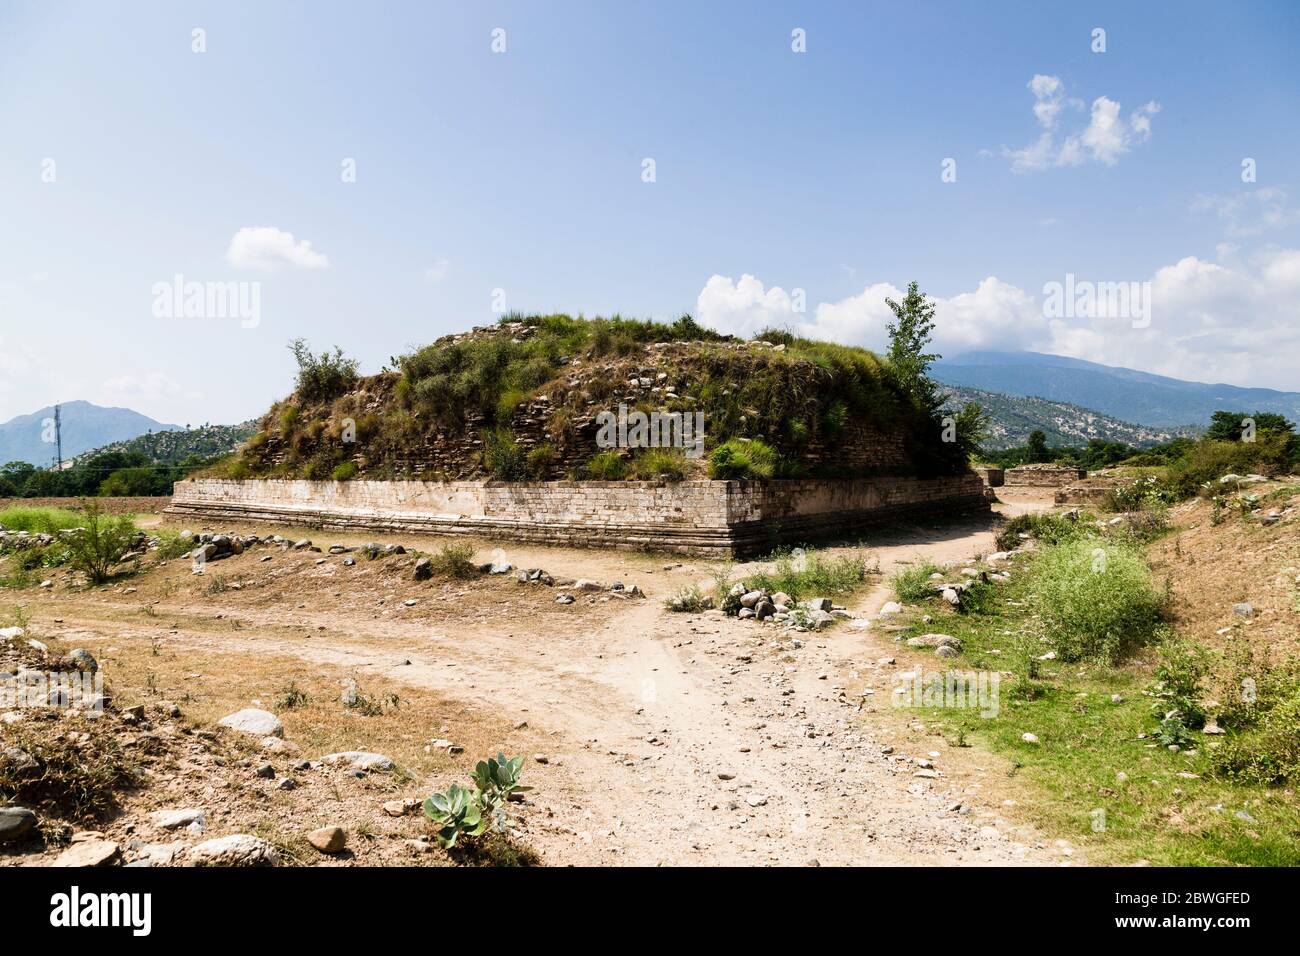 Andan Dheri stupa, Andan Dheri, Lower Dir, province de Khyber Pakhtunkhwa, Pakistan, Asie du Sud, Asie Banque D'Images